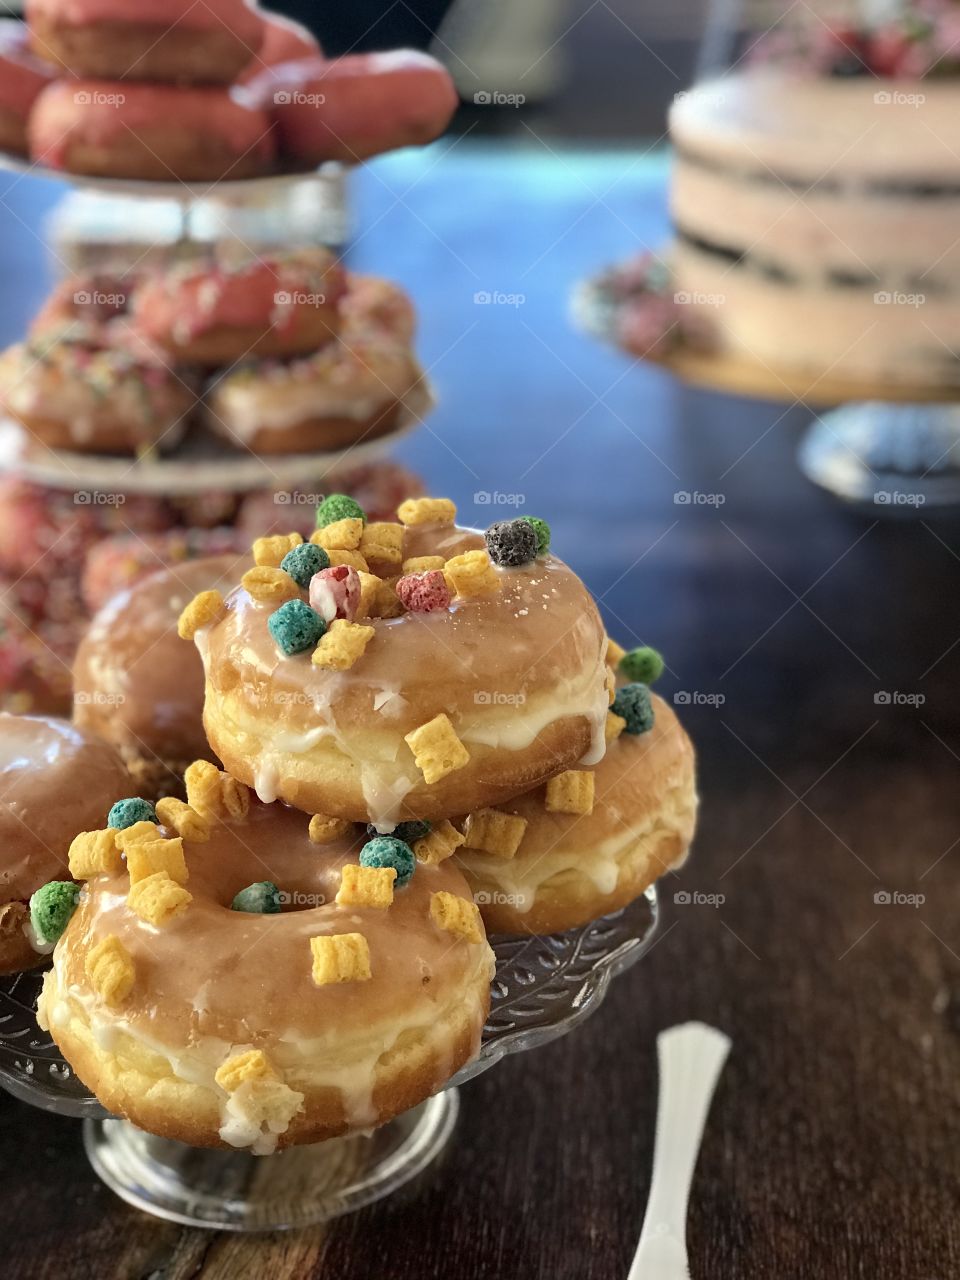 Cake / donuts / desserts 